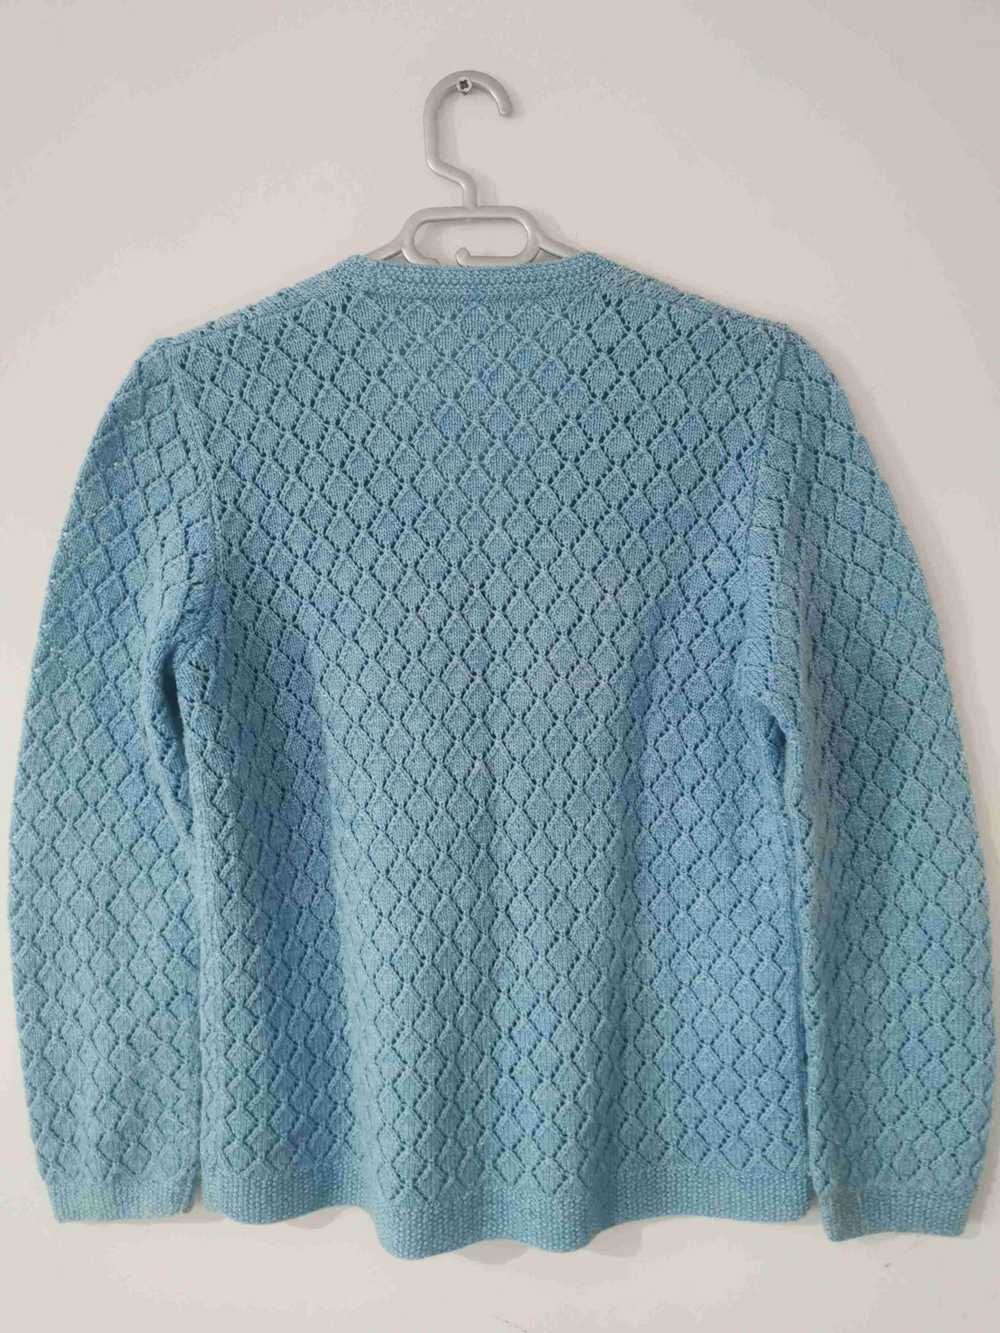 Wool cardigan - Sky blue wool cardigan, with open… - image 5